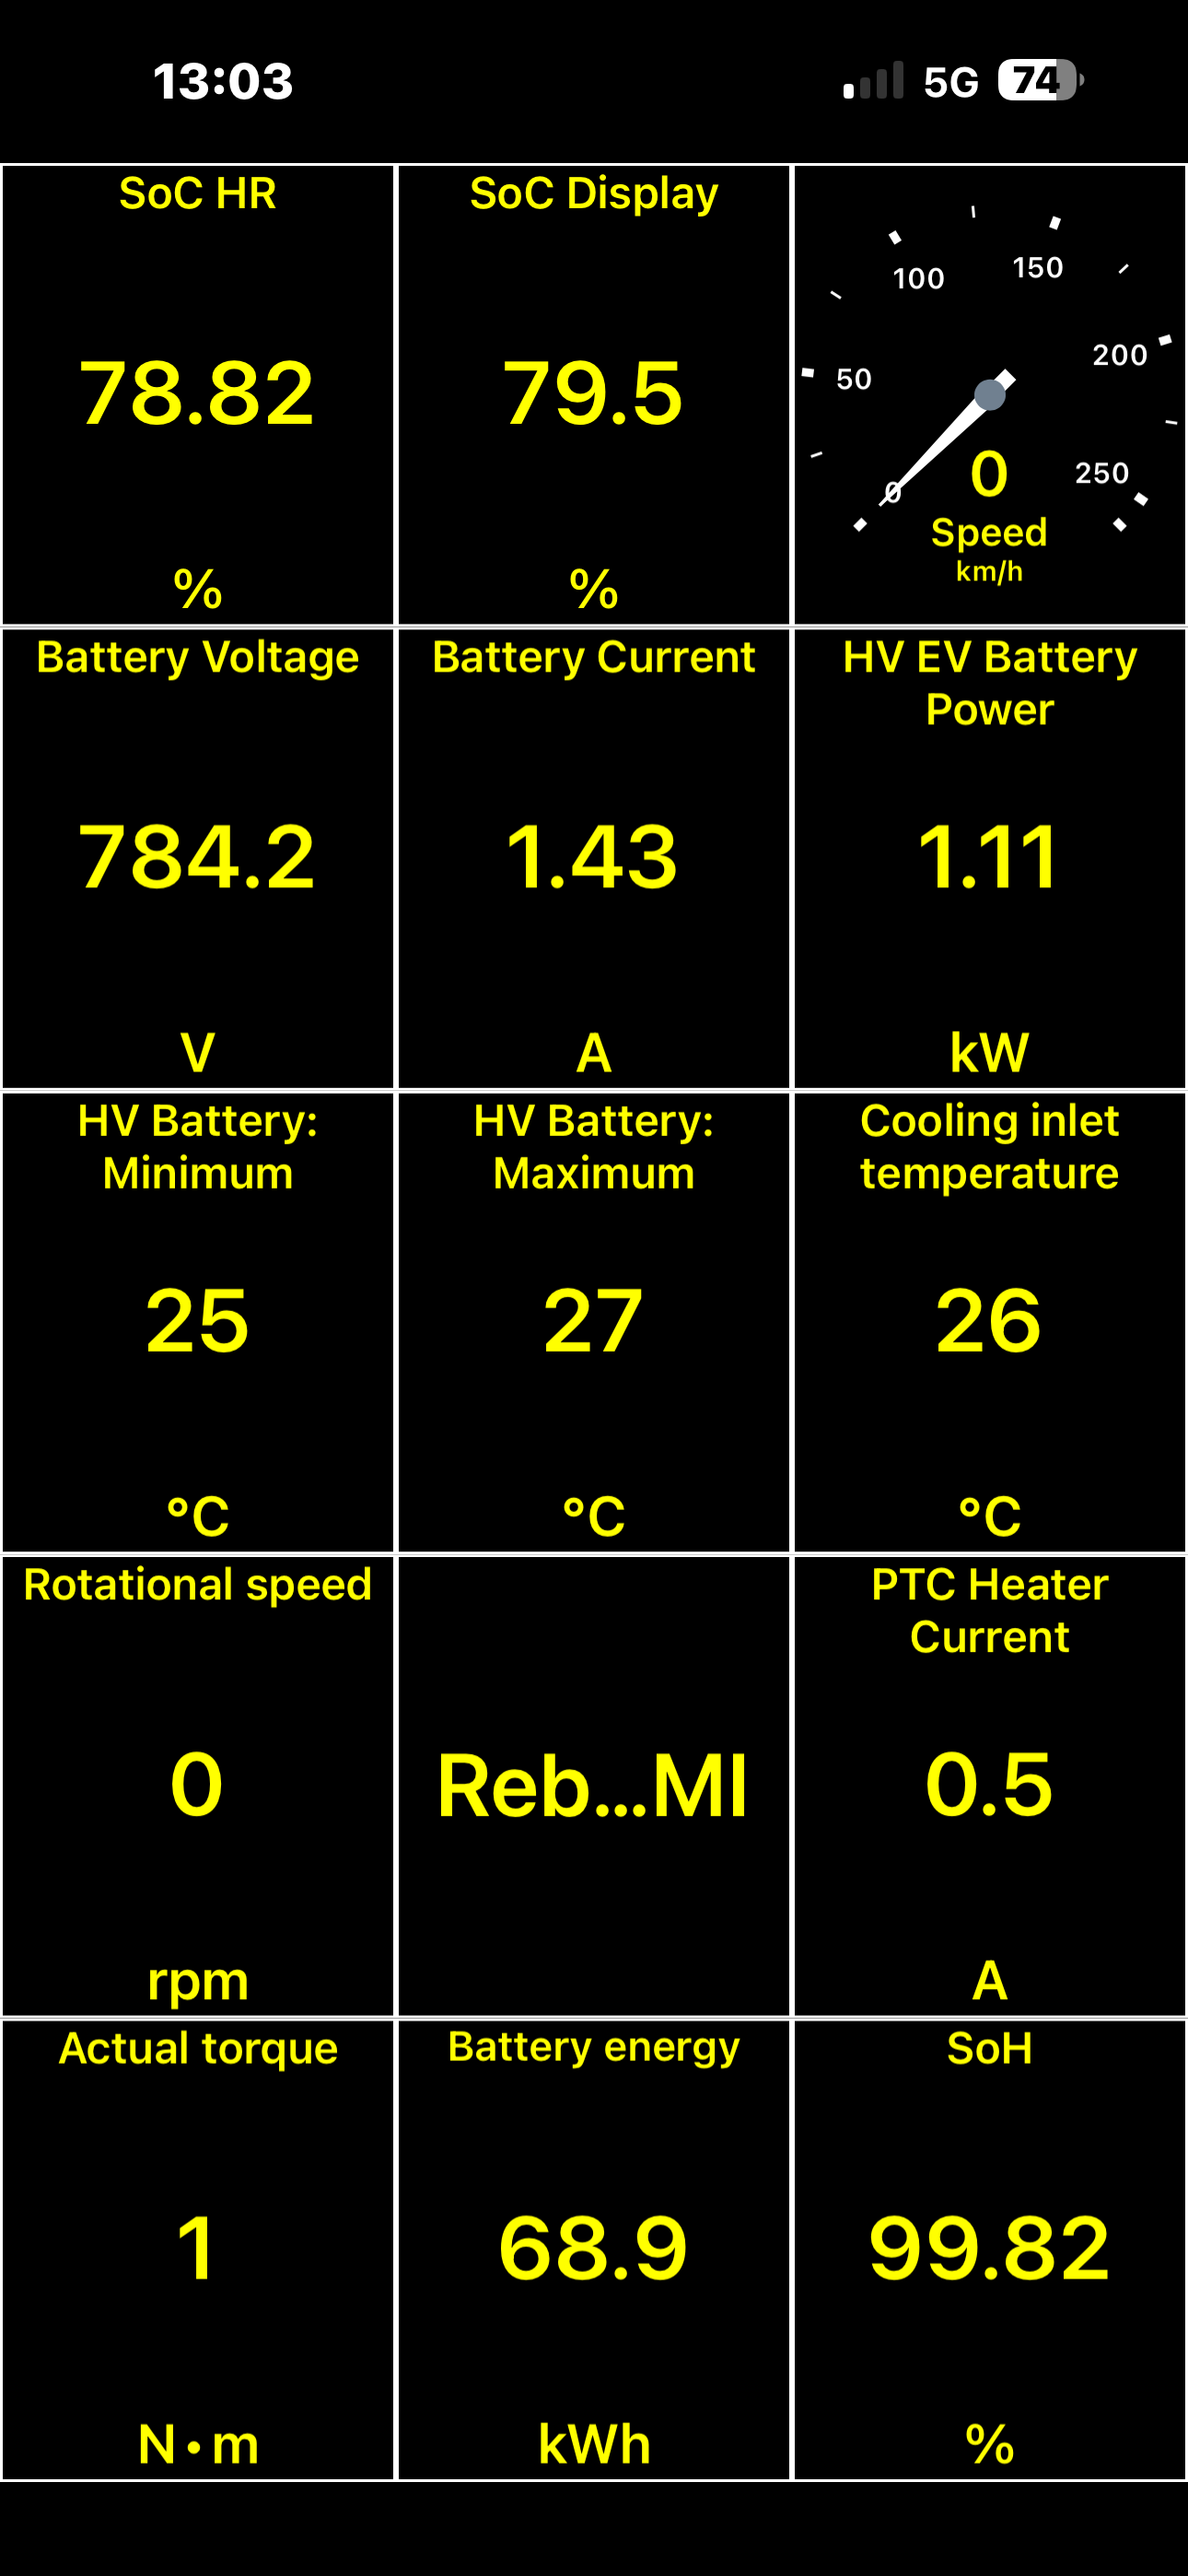 Porsche Taycan Baseline for HV Battery SoH Performance IMG_0982